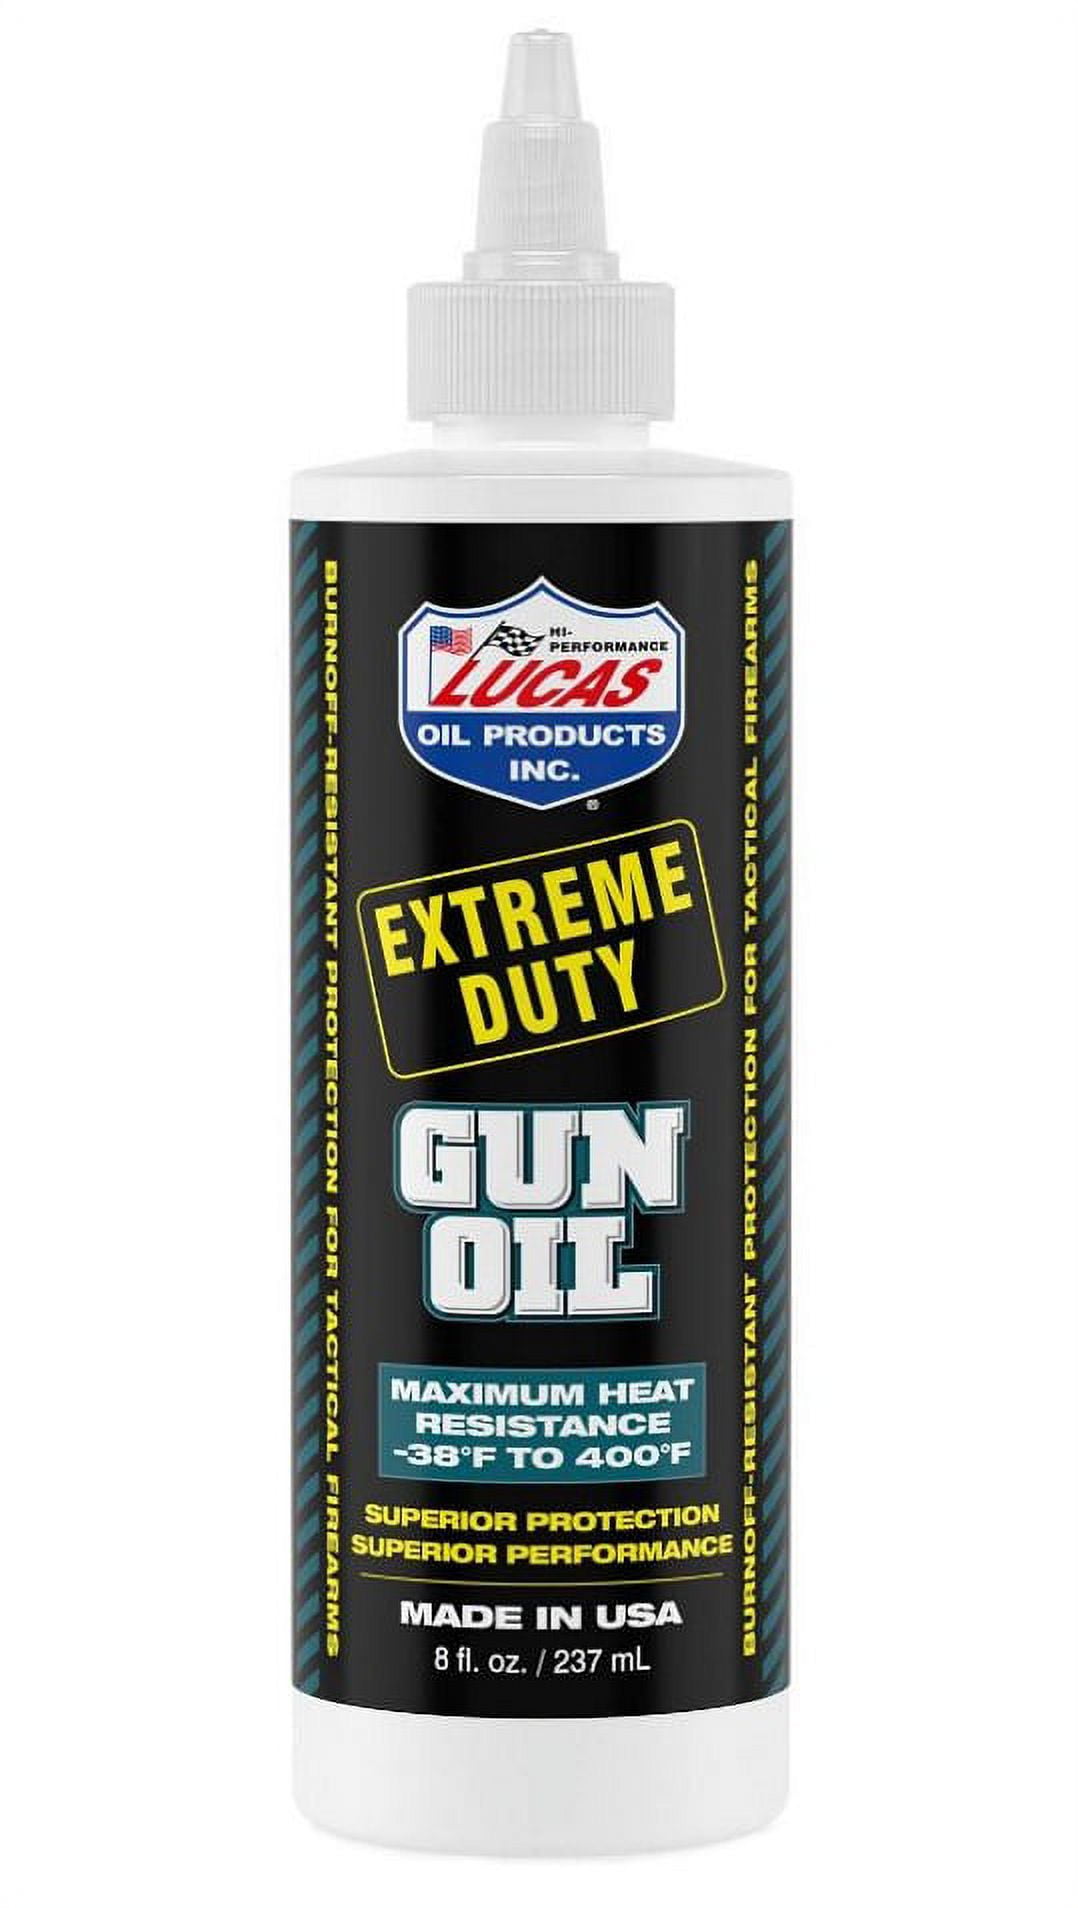 Lucas Oil 10870 Extreme Duty Gun Oil (8oz.), 1 Pack 